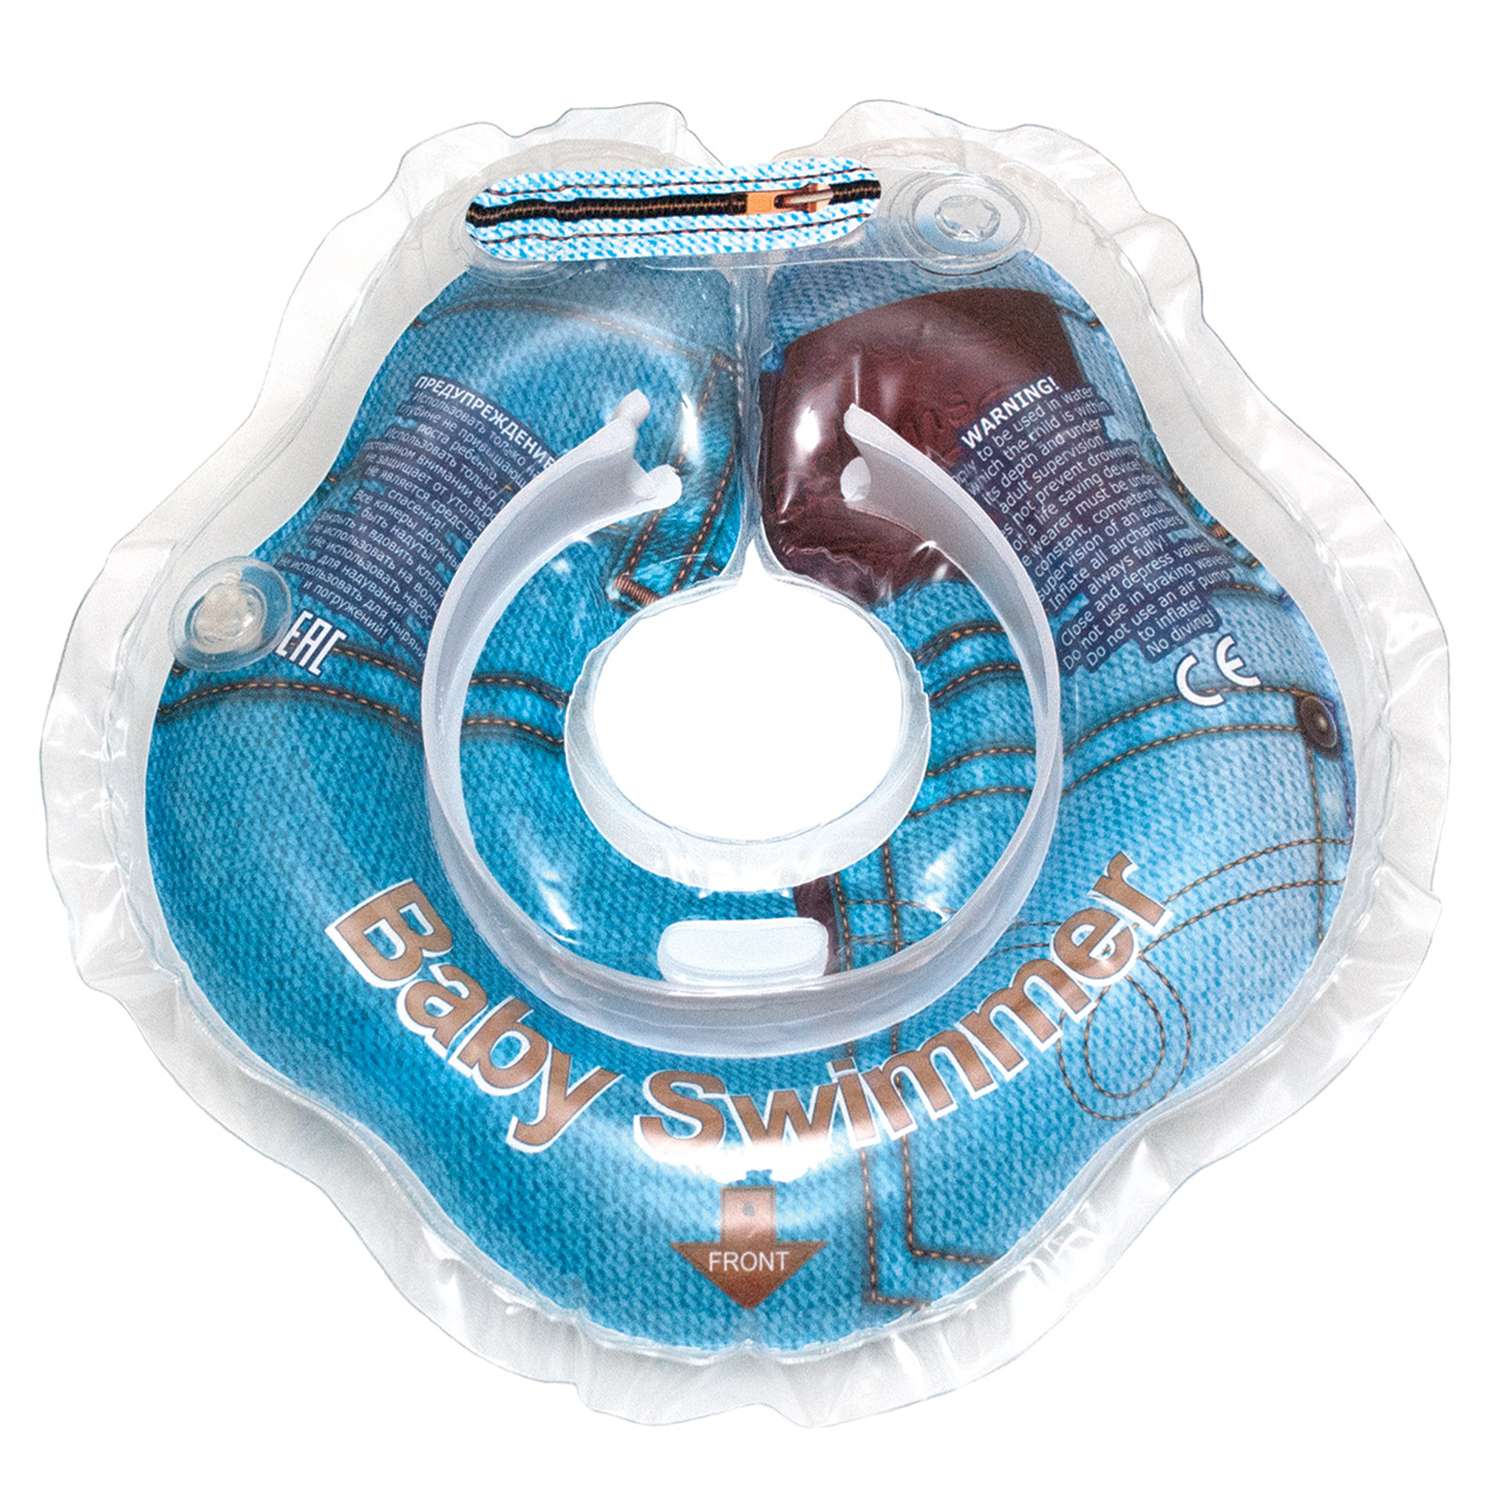 Круг для купания BabySwimmer на шею 0-24месяцев Джинса - фото 1